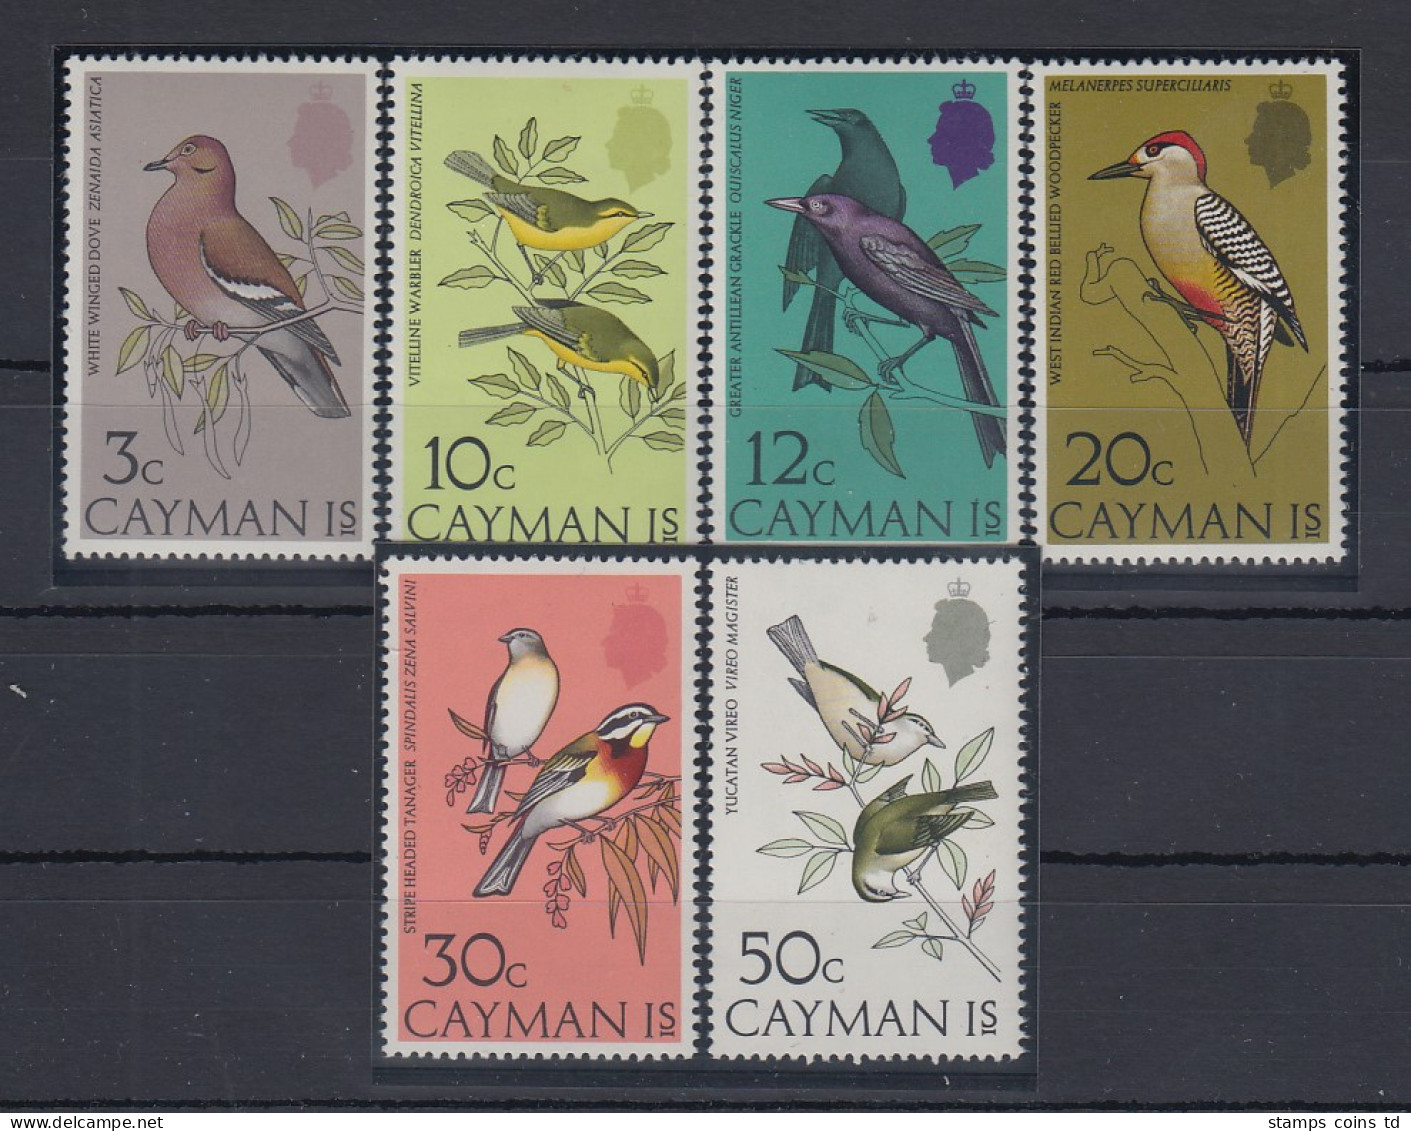 Kaiman-Inseln / Cayman Islands 1974 Vögel Mi.-Nr. 321-326 ** - Cayman Islands